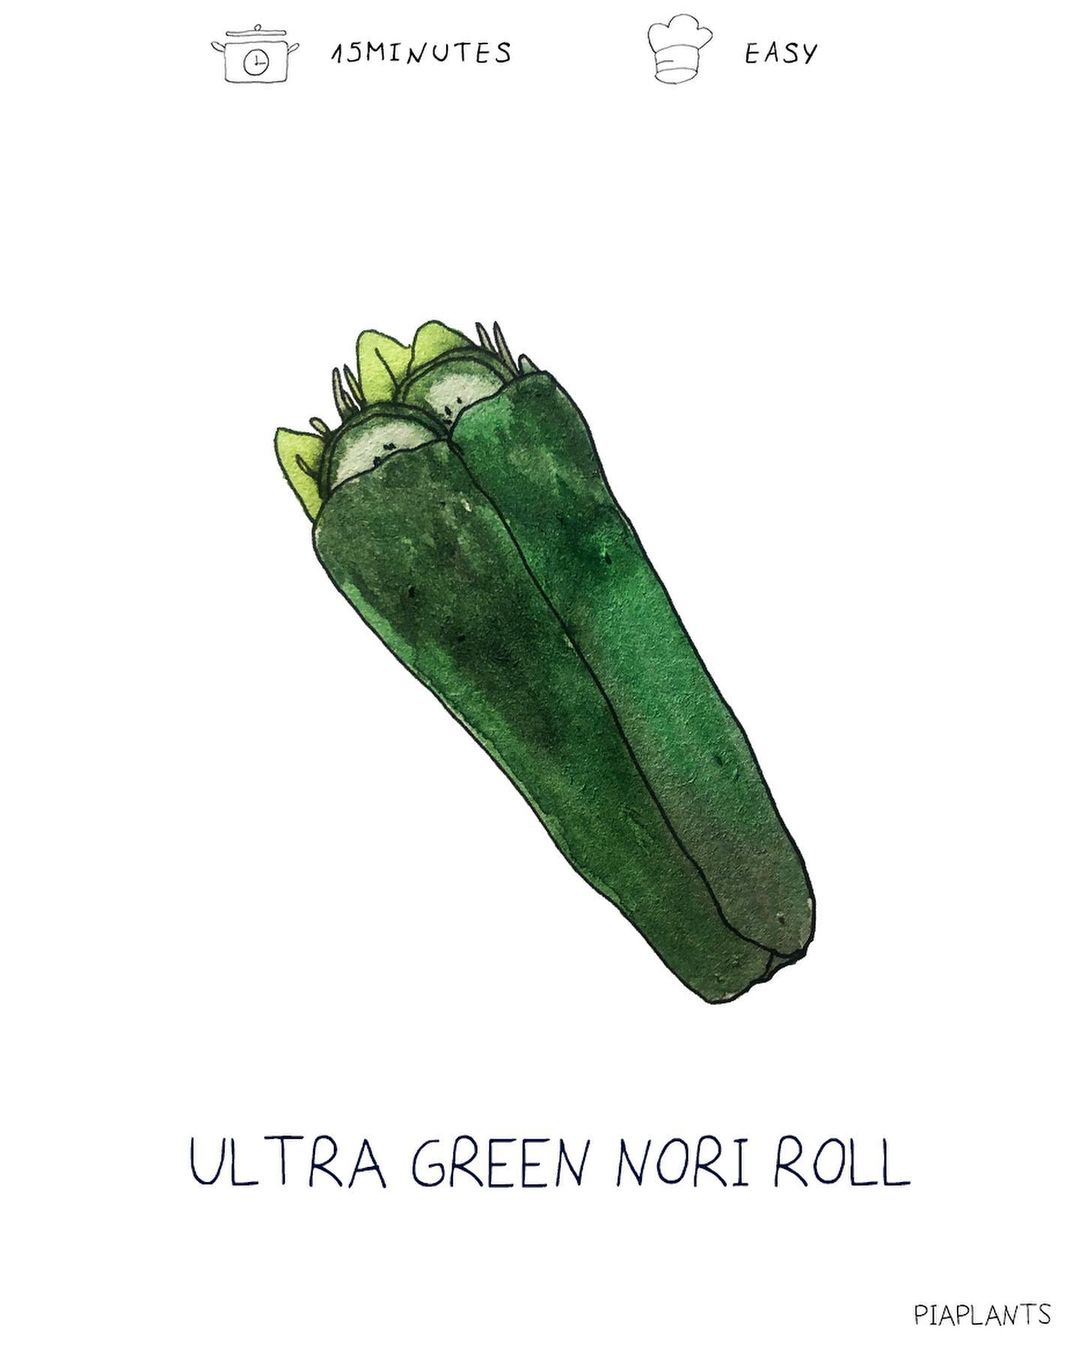 Ultra green nori roll